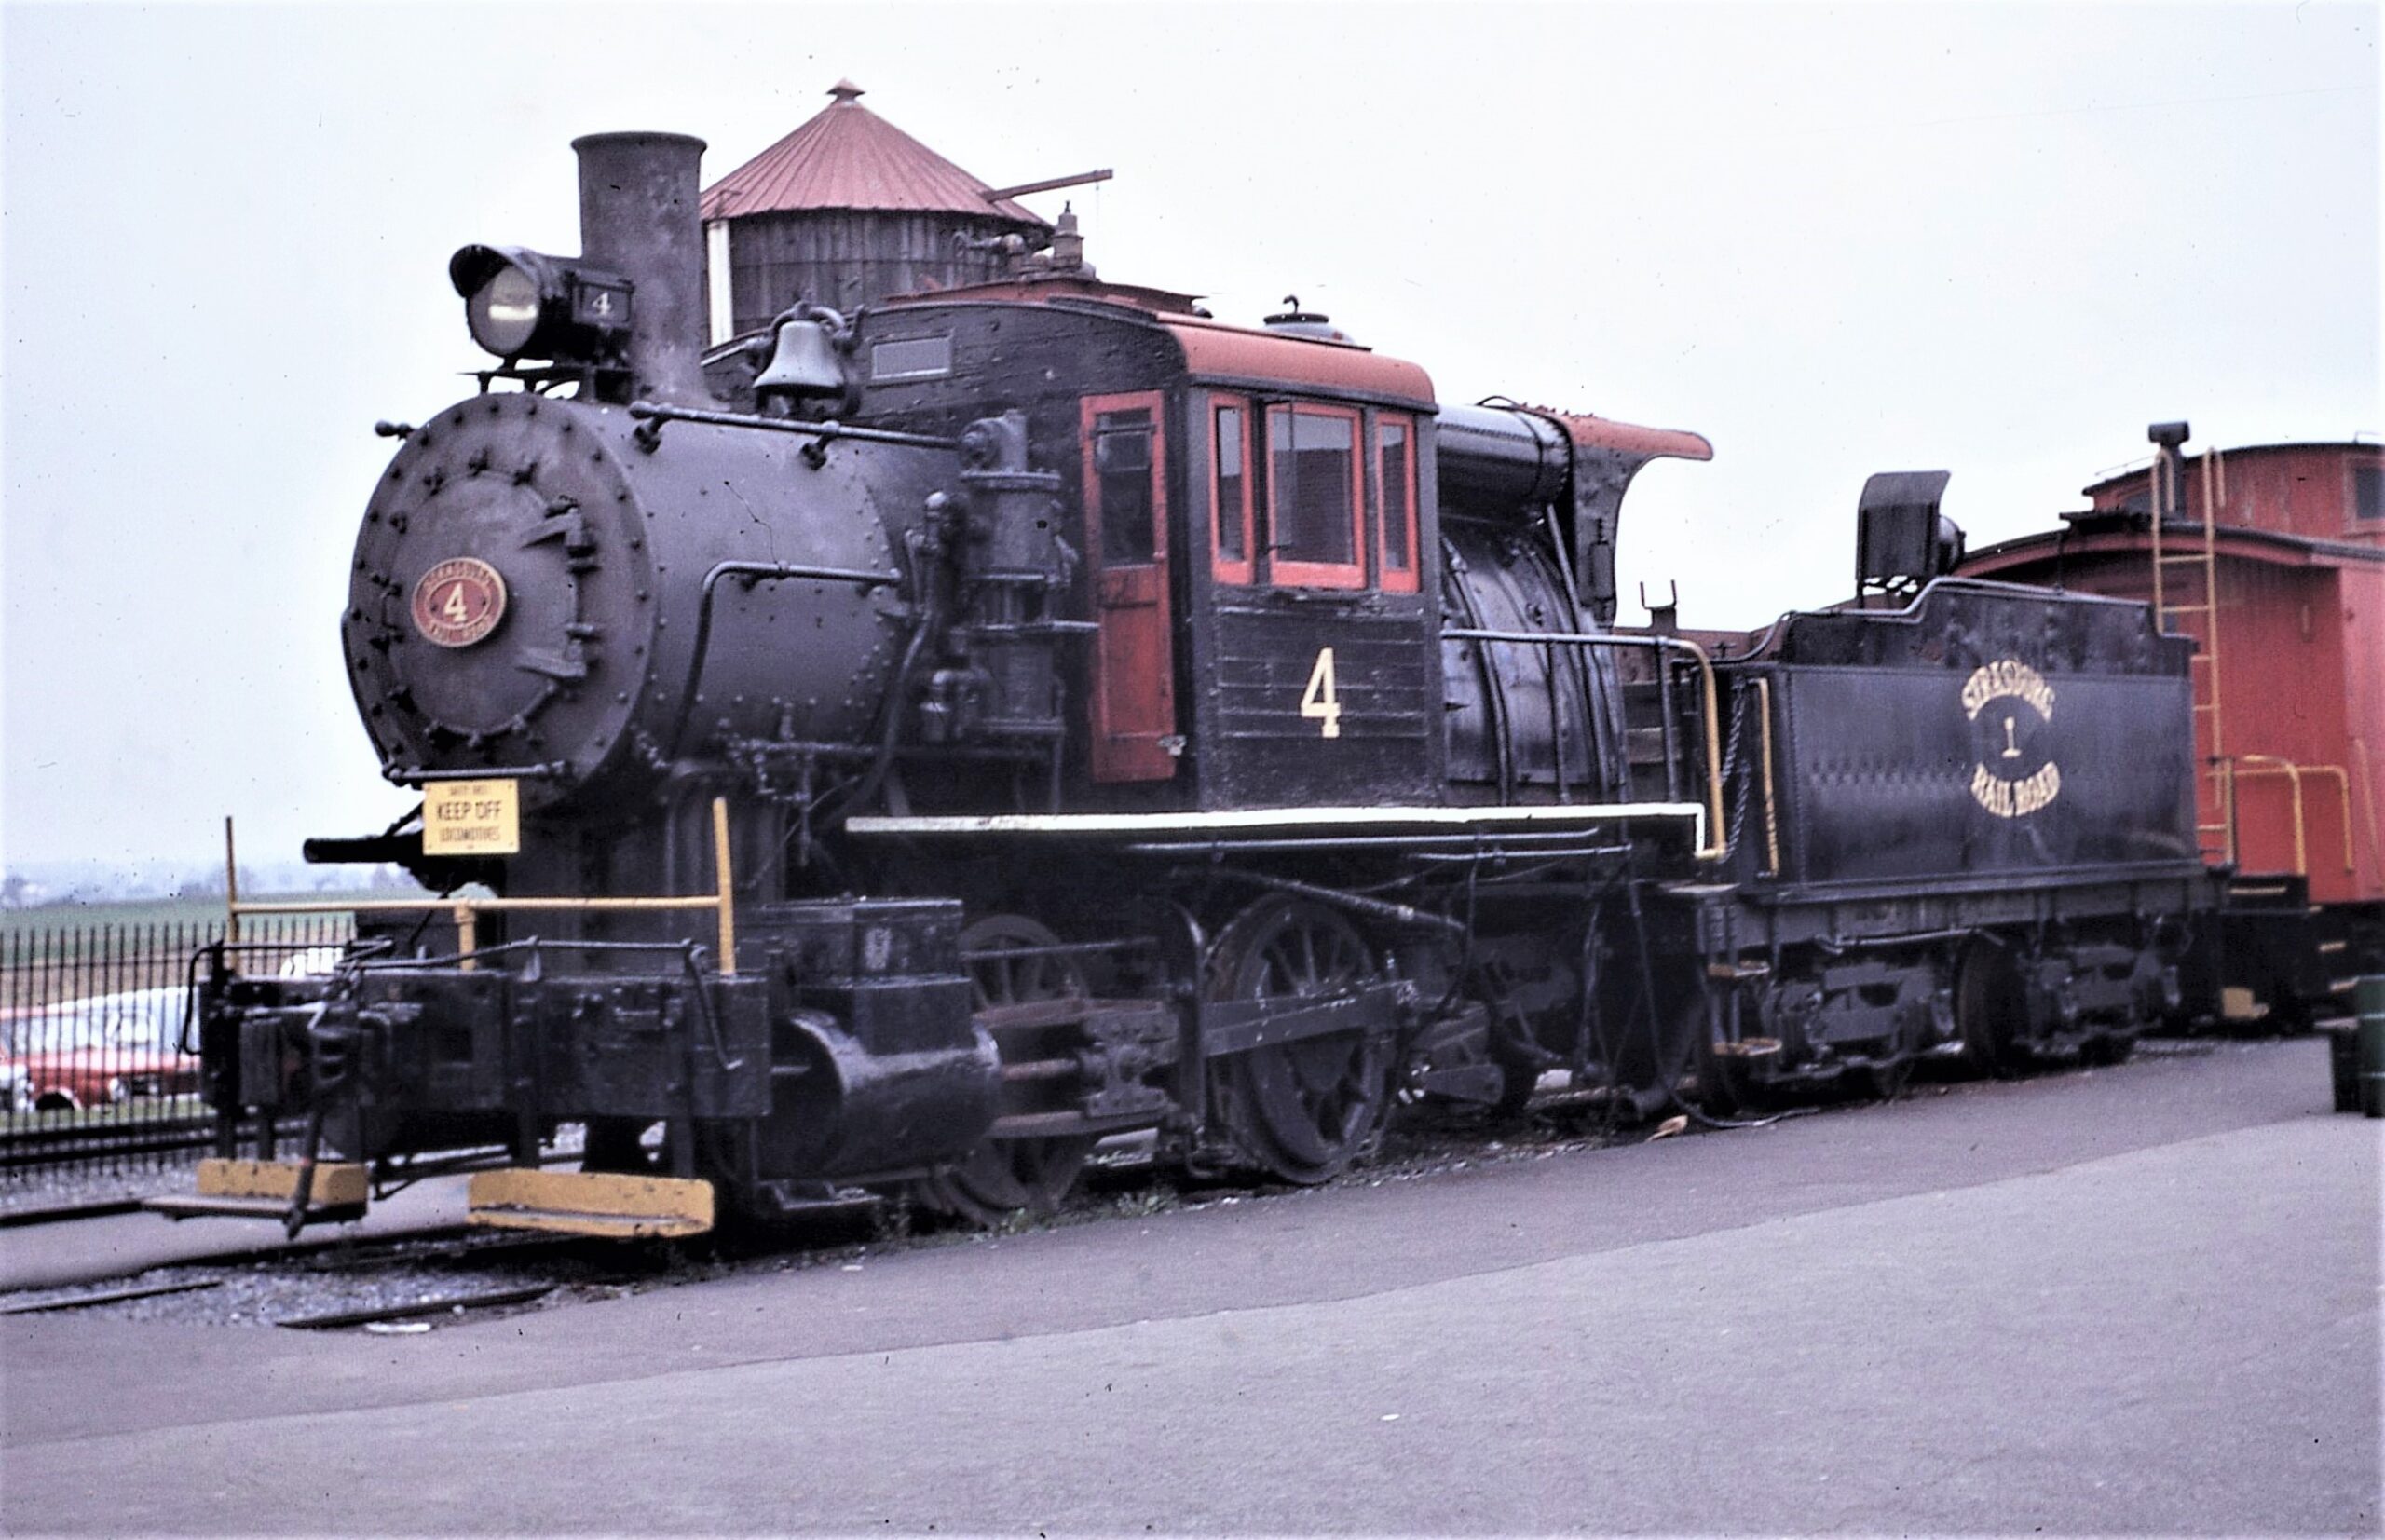 Strasburg Railroad | Strasburg, Pennsylvania | Class 0-4-0 #4 Camelback steam locomotive | ex- E.J. Lavino | ex-Philadelphia & Reading Railroad | October 1970 | Calvin Banse photograph